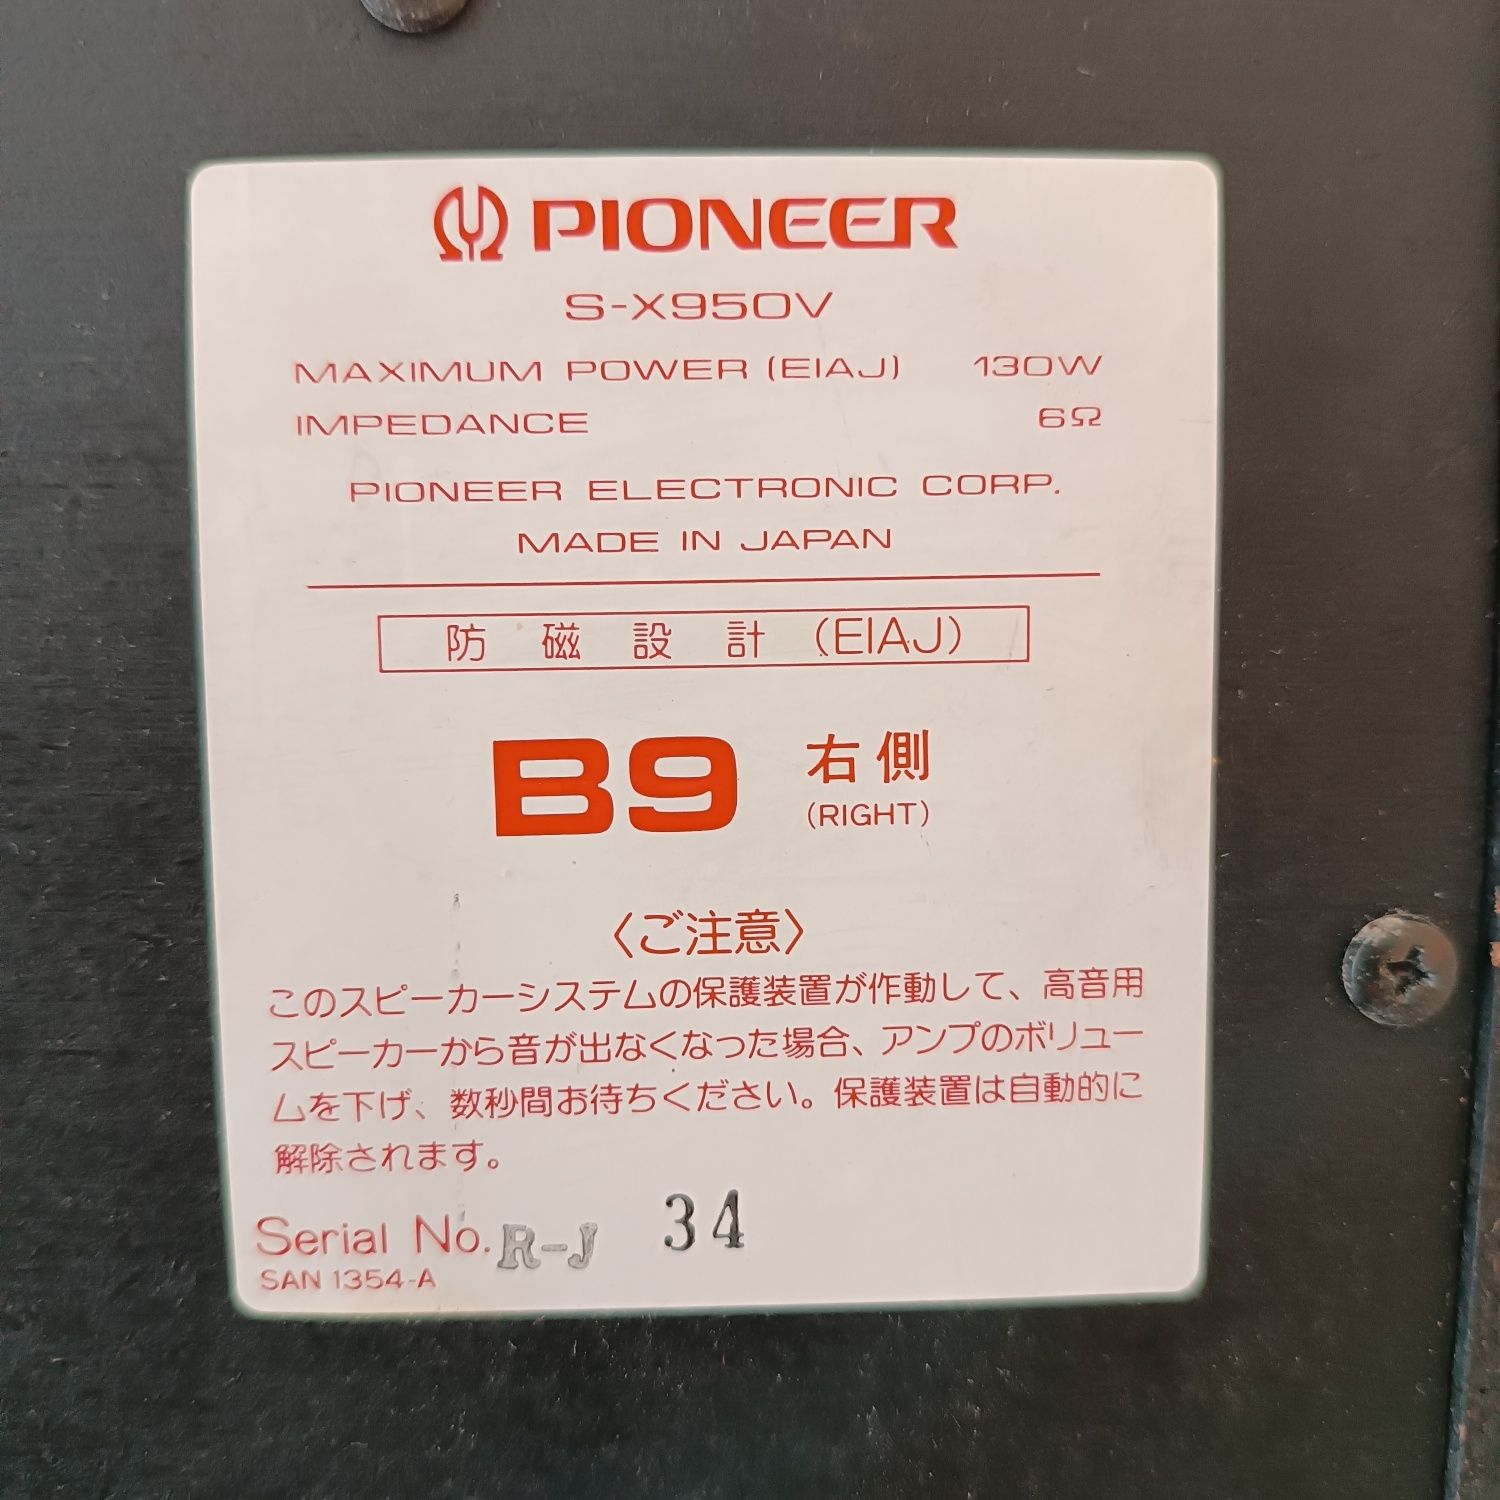 NAD 3020 , Pioneer S-X950V